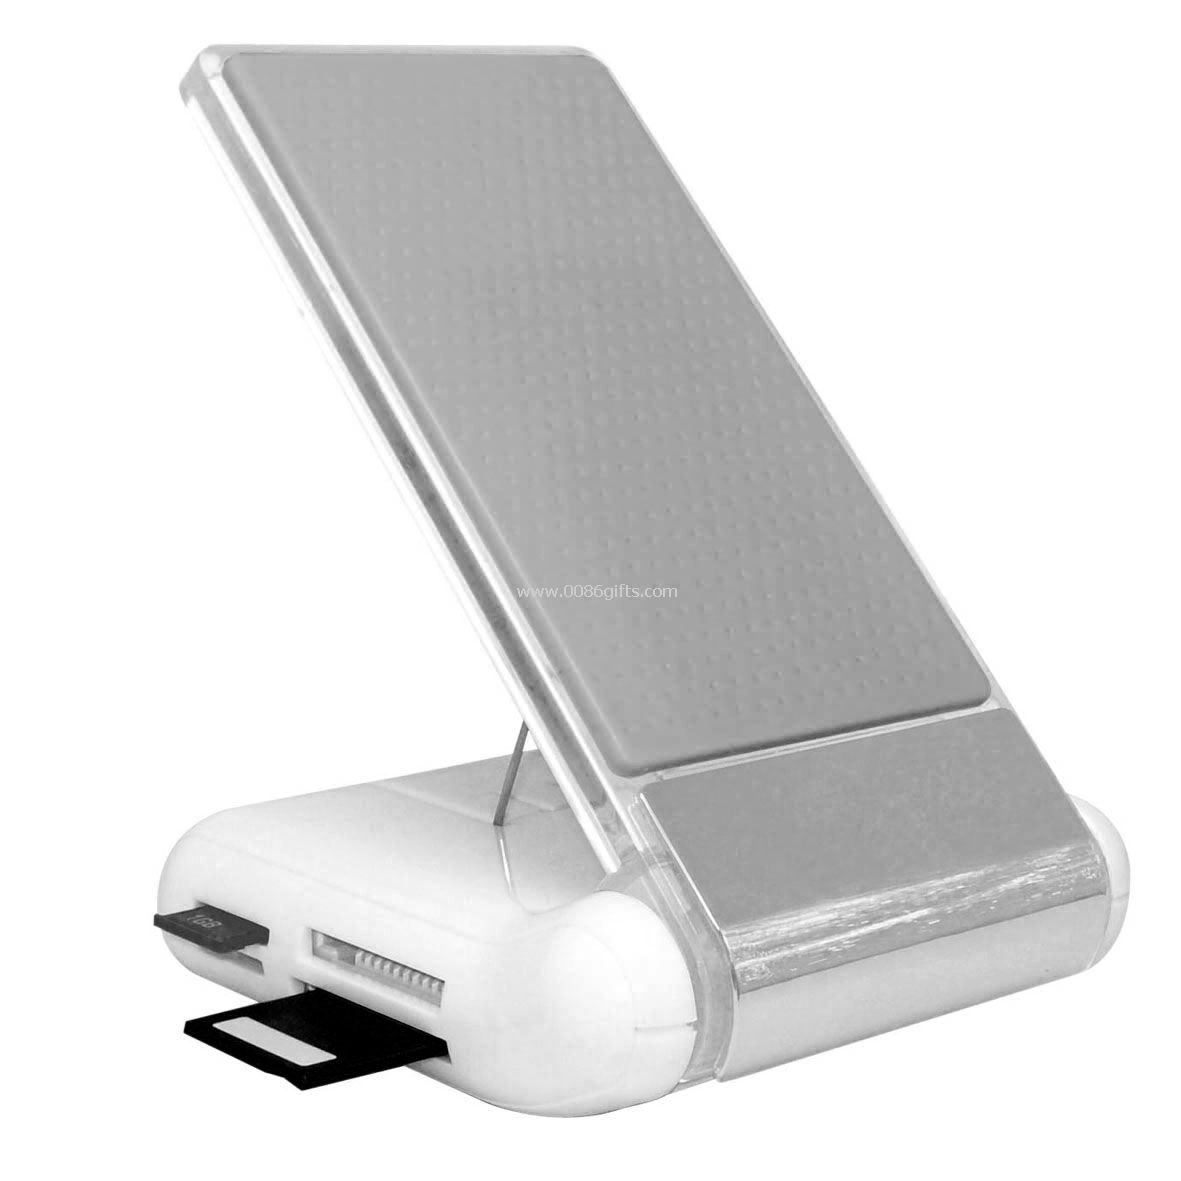 USB Hub Card Reader Mobile Holder